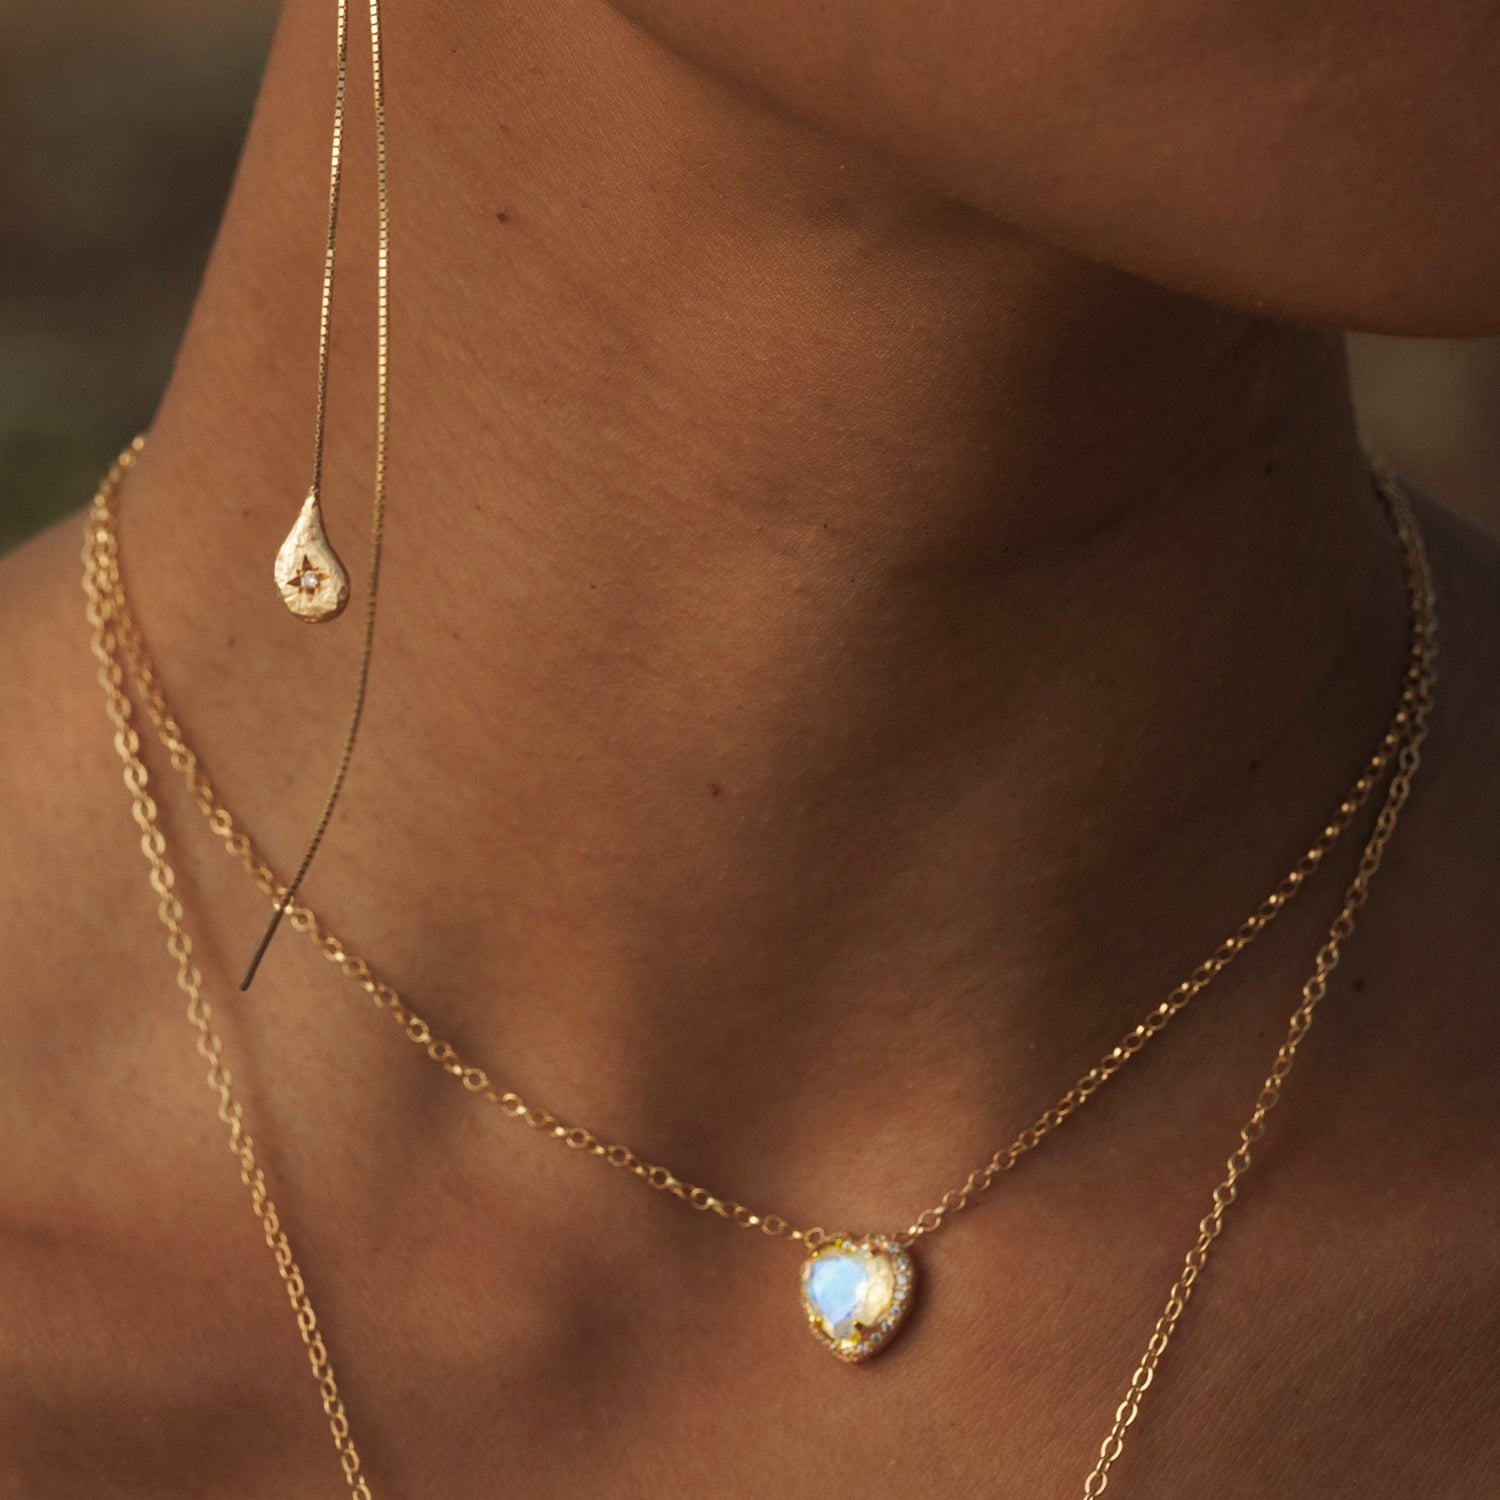 Baby Inanna Necklace - Moonstone &amp; Diamonds - Danielle Gerber Freedom Jewelry